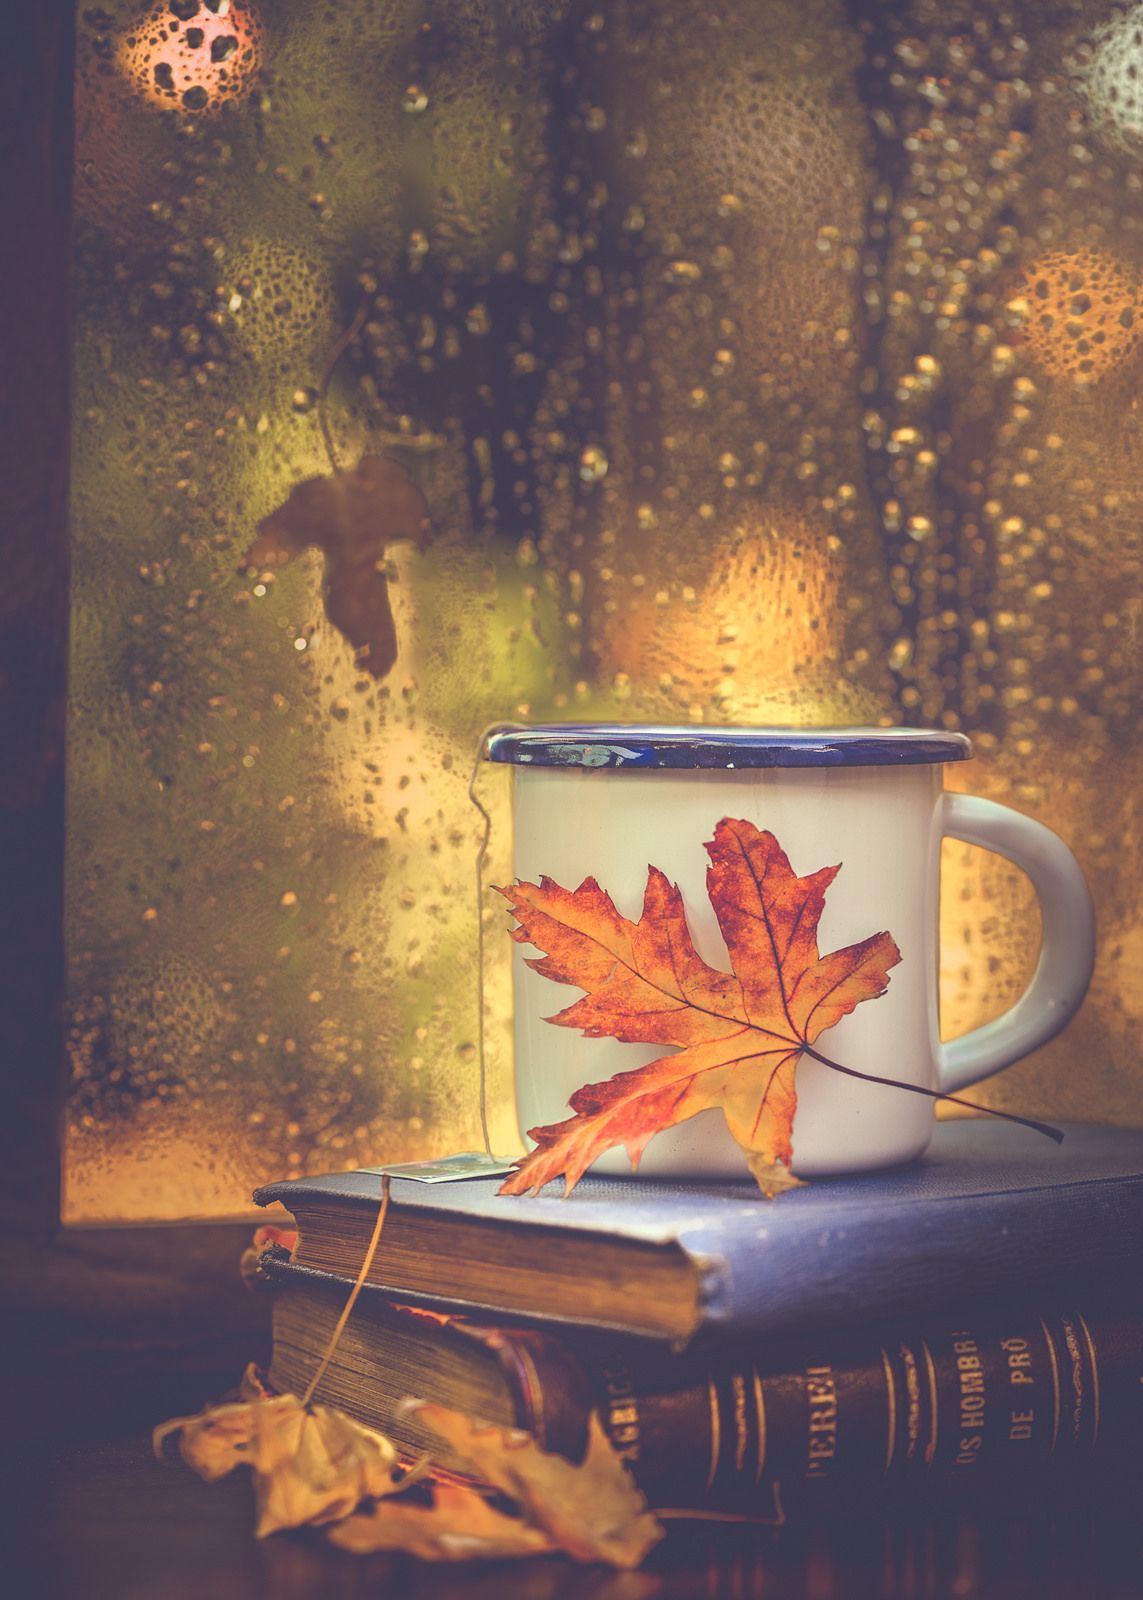 Books, tea and rain drops. Fall picture, Autumn cozy, Autumn inspiration